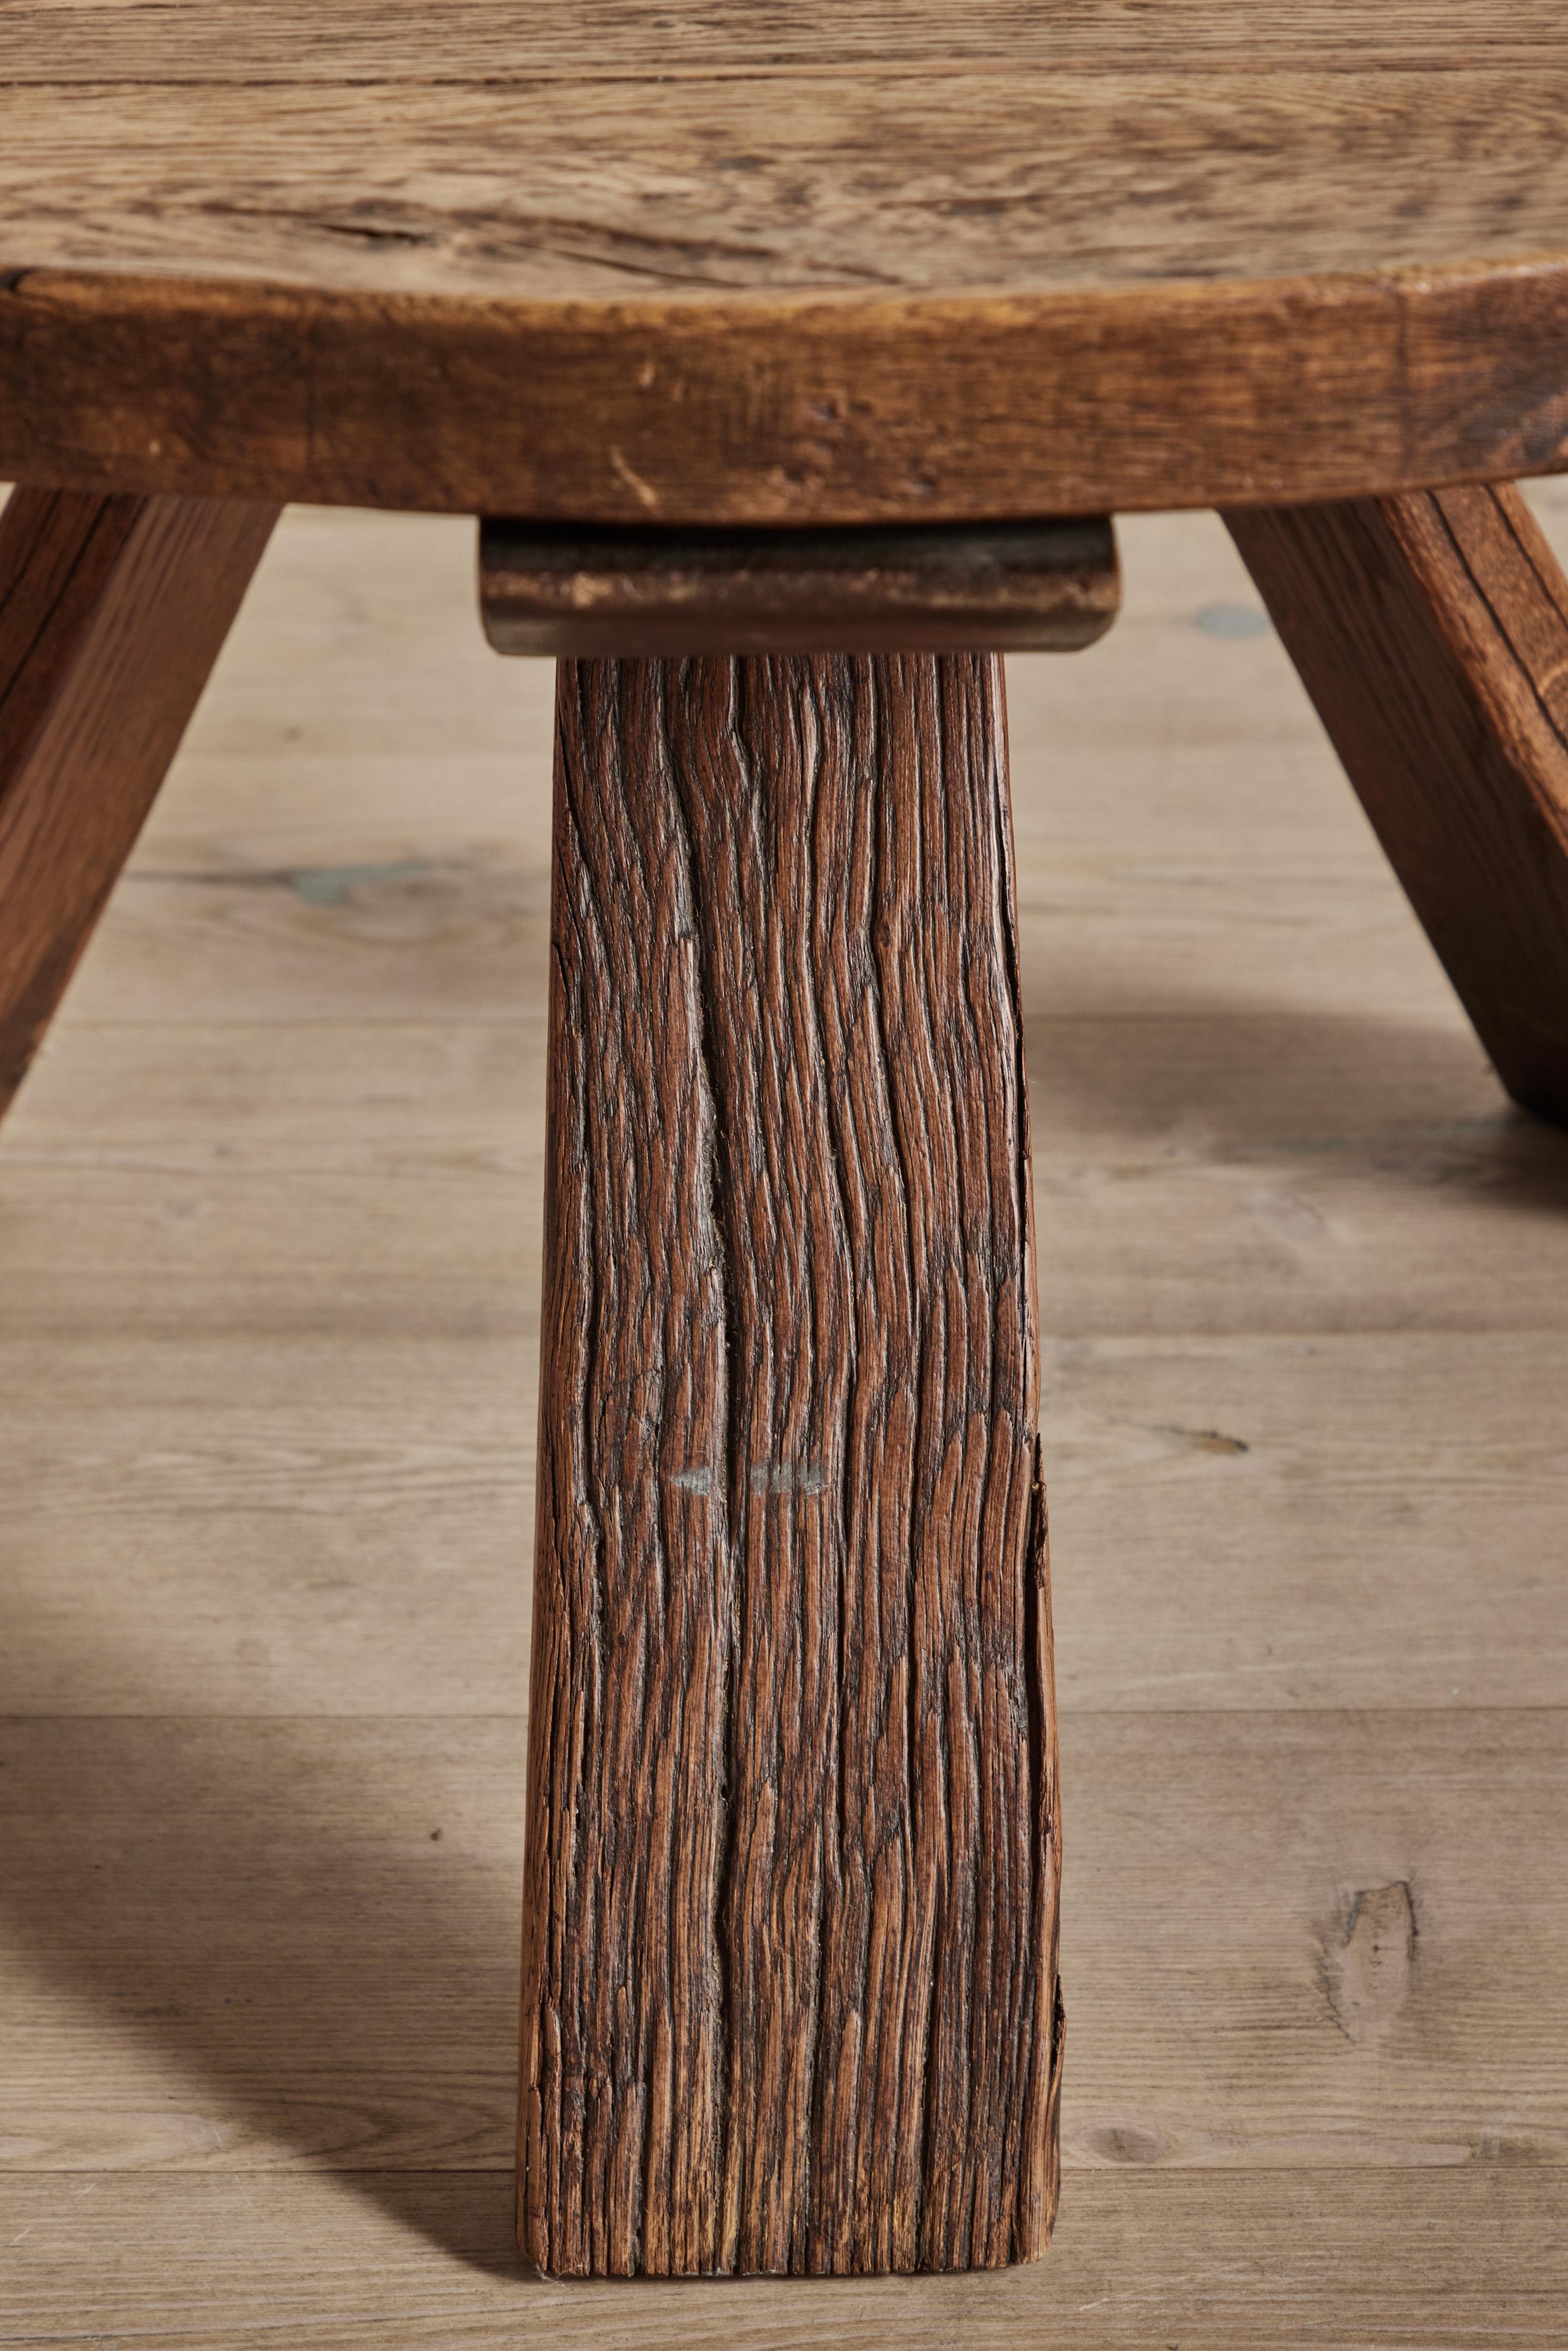 Wood Pierre Chapo Style Coffee Table